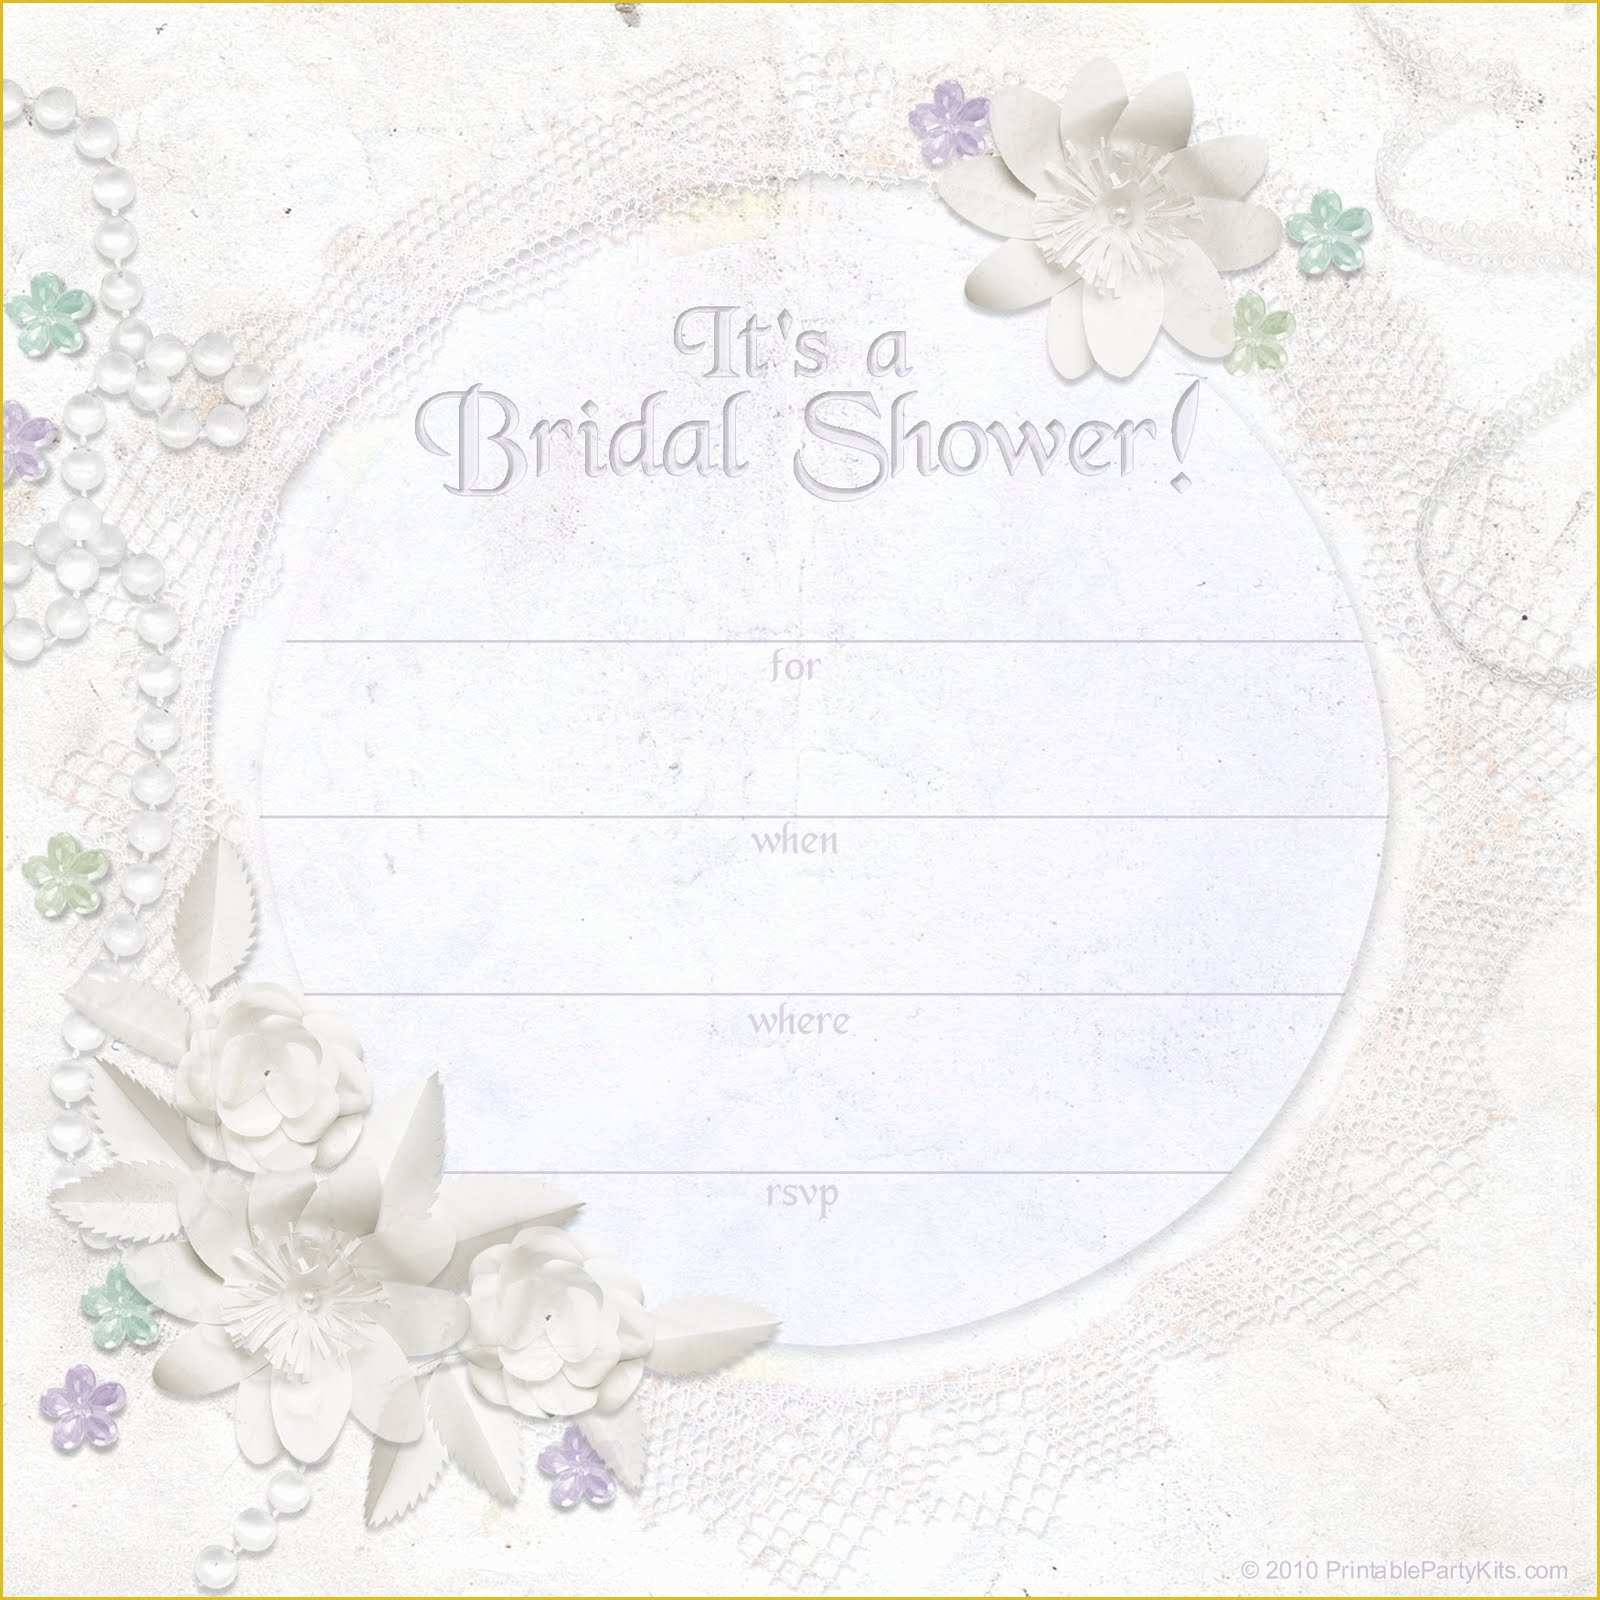 Free Printable Bridal Shower Invitations Templates Of Free Printable Party Invitations Ivory Dreams Bridal